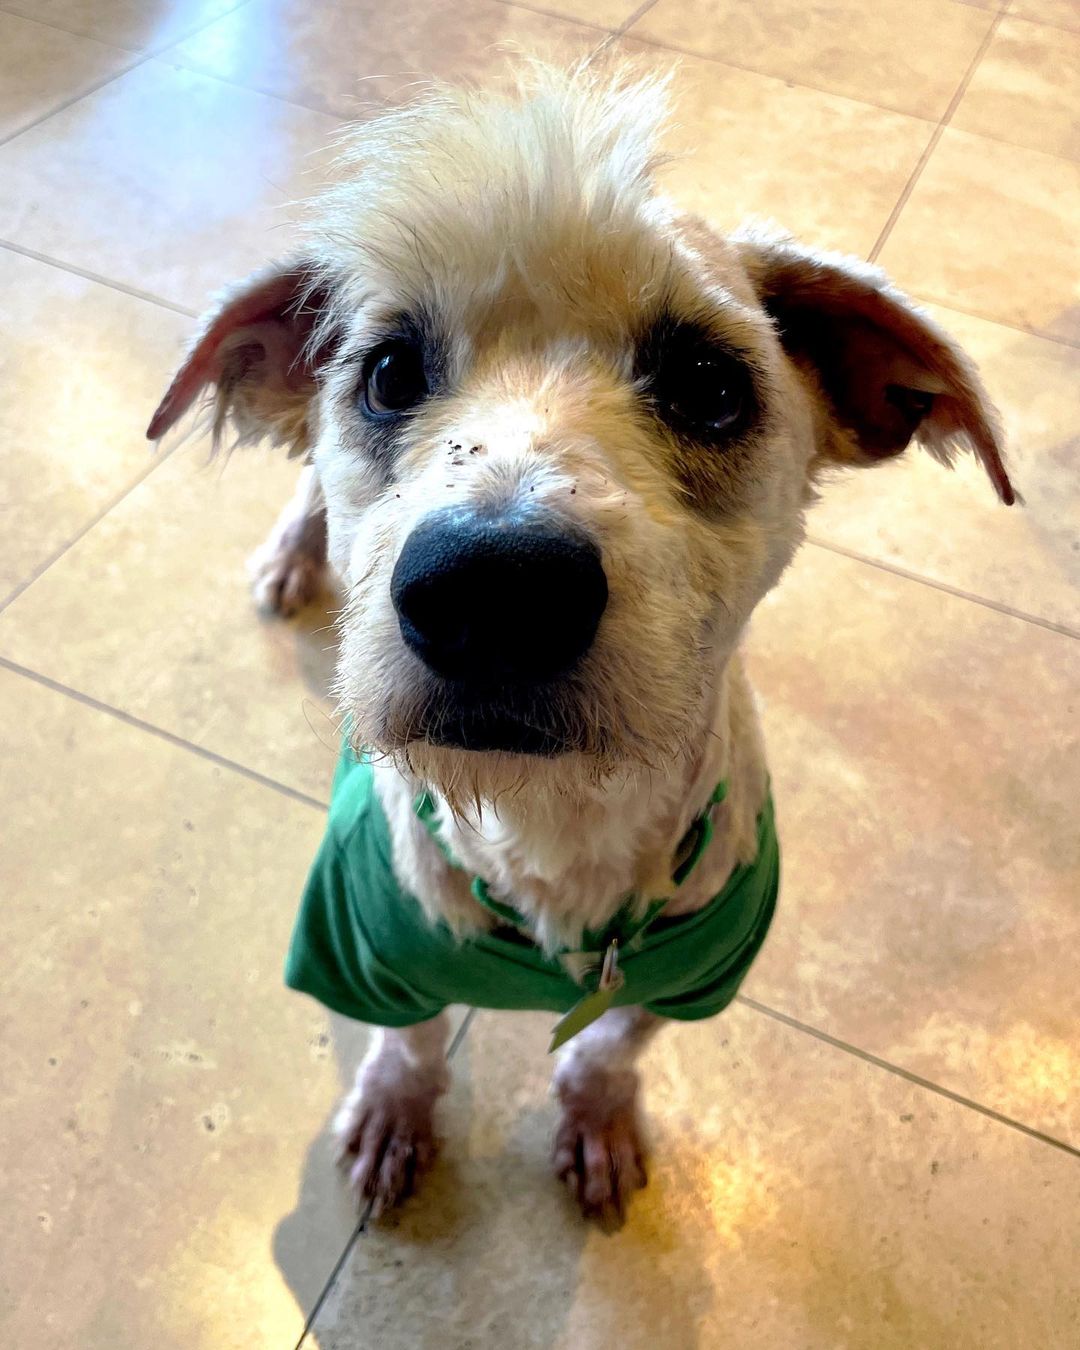 close-up photo of a dog wearing green shirt